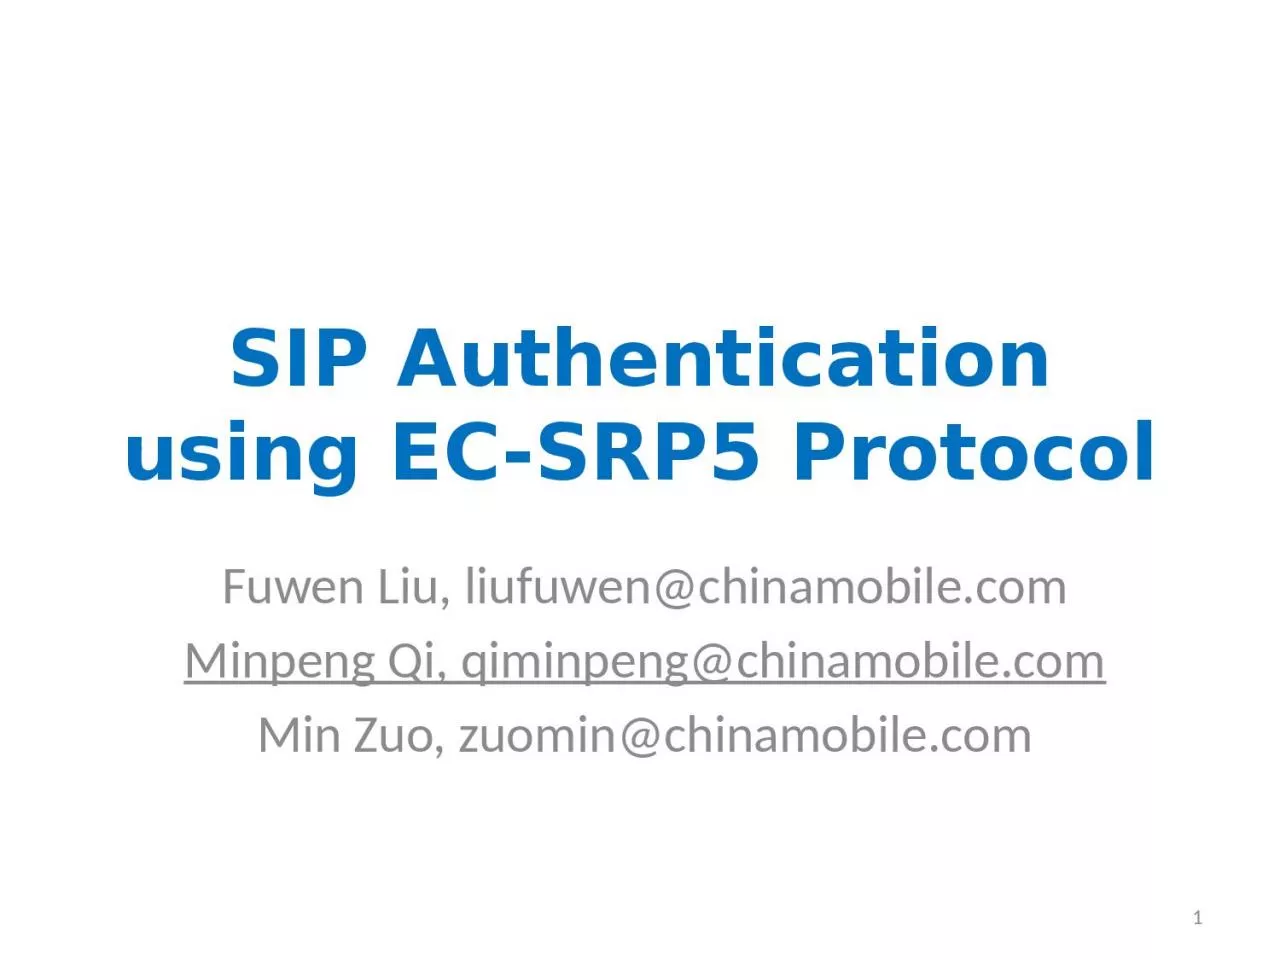 SIP Authentication using EC-SRP5 Protocol